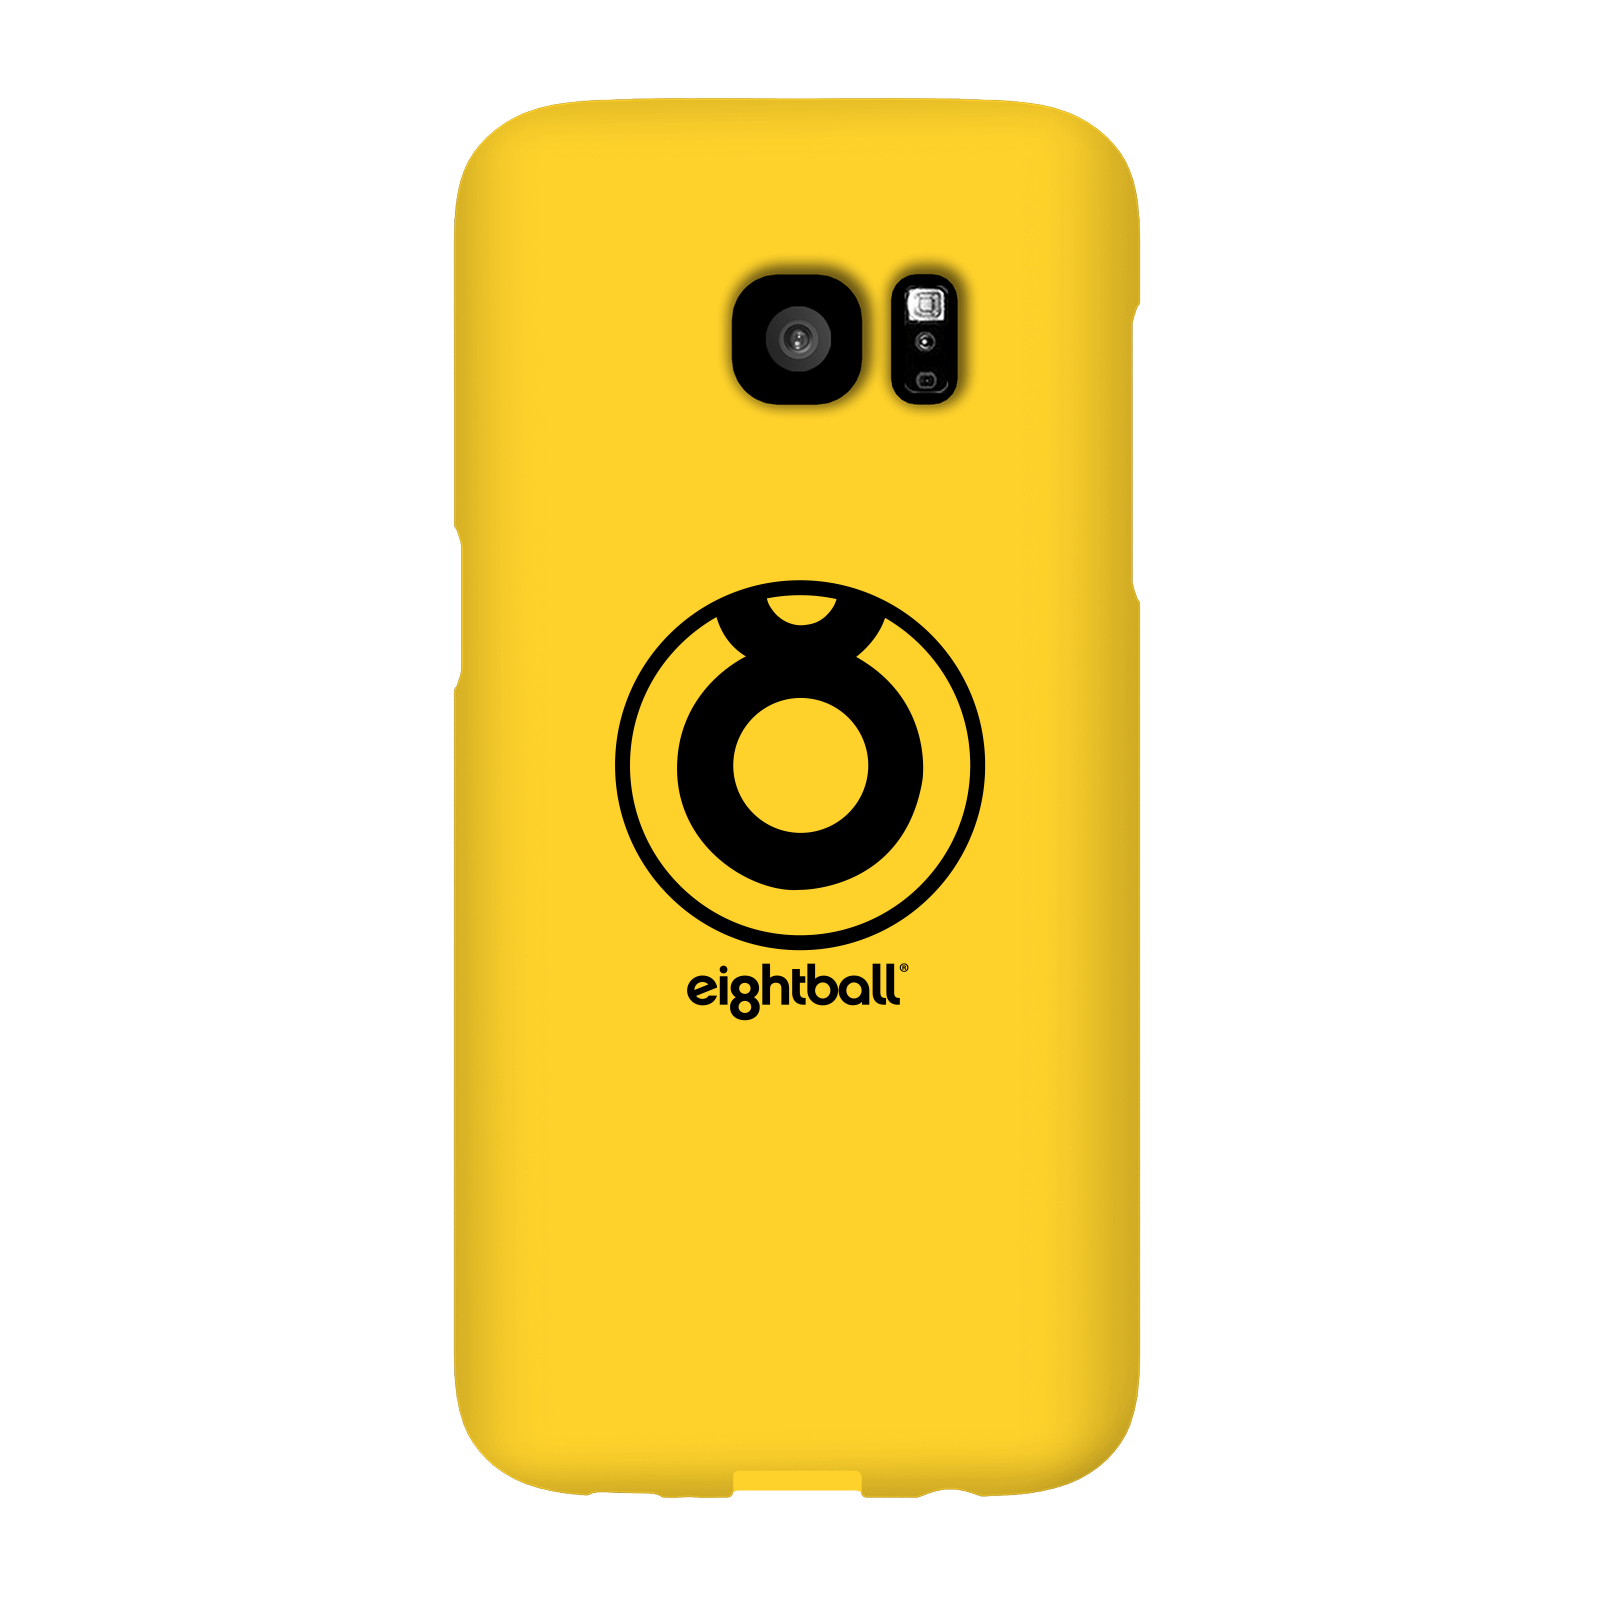 Funda Móvil Ei8htball Large Circle Logo para iPhone y Android - Samsung S7 Edge - Carcasa rígida - Brillante